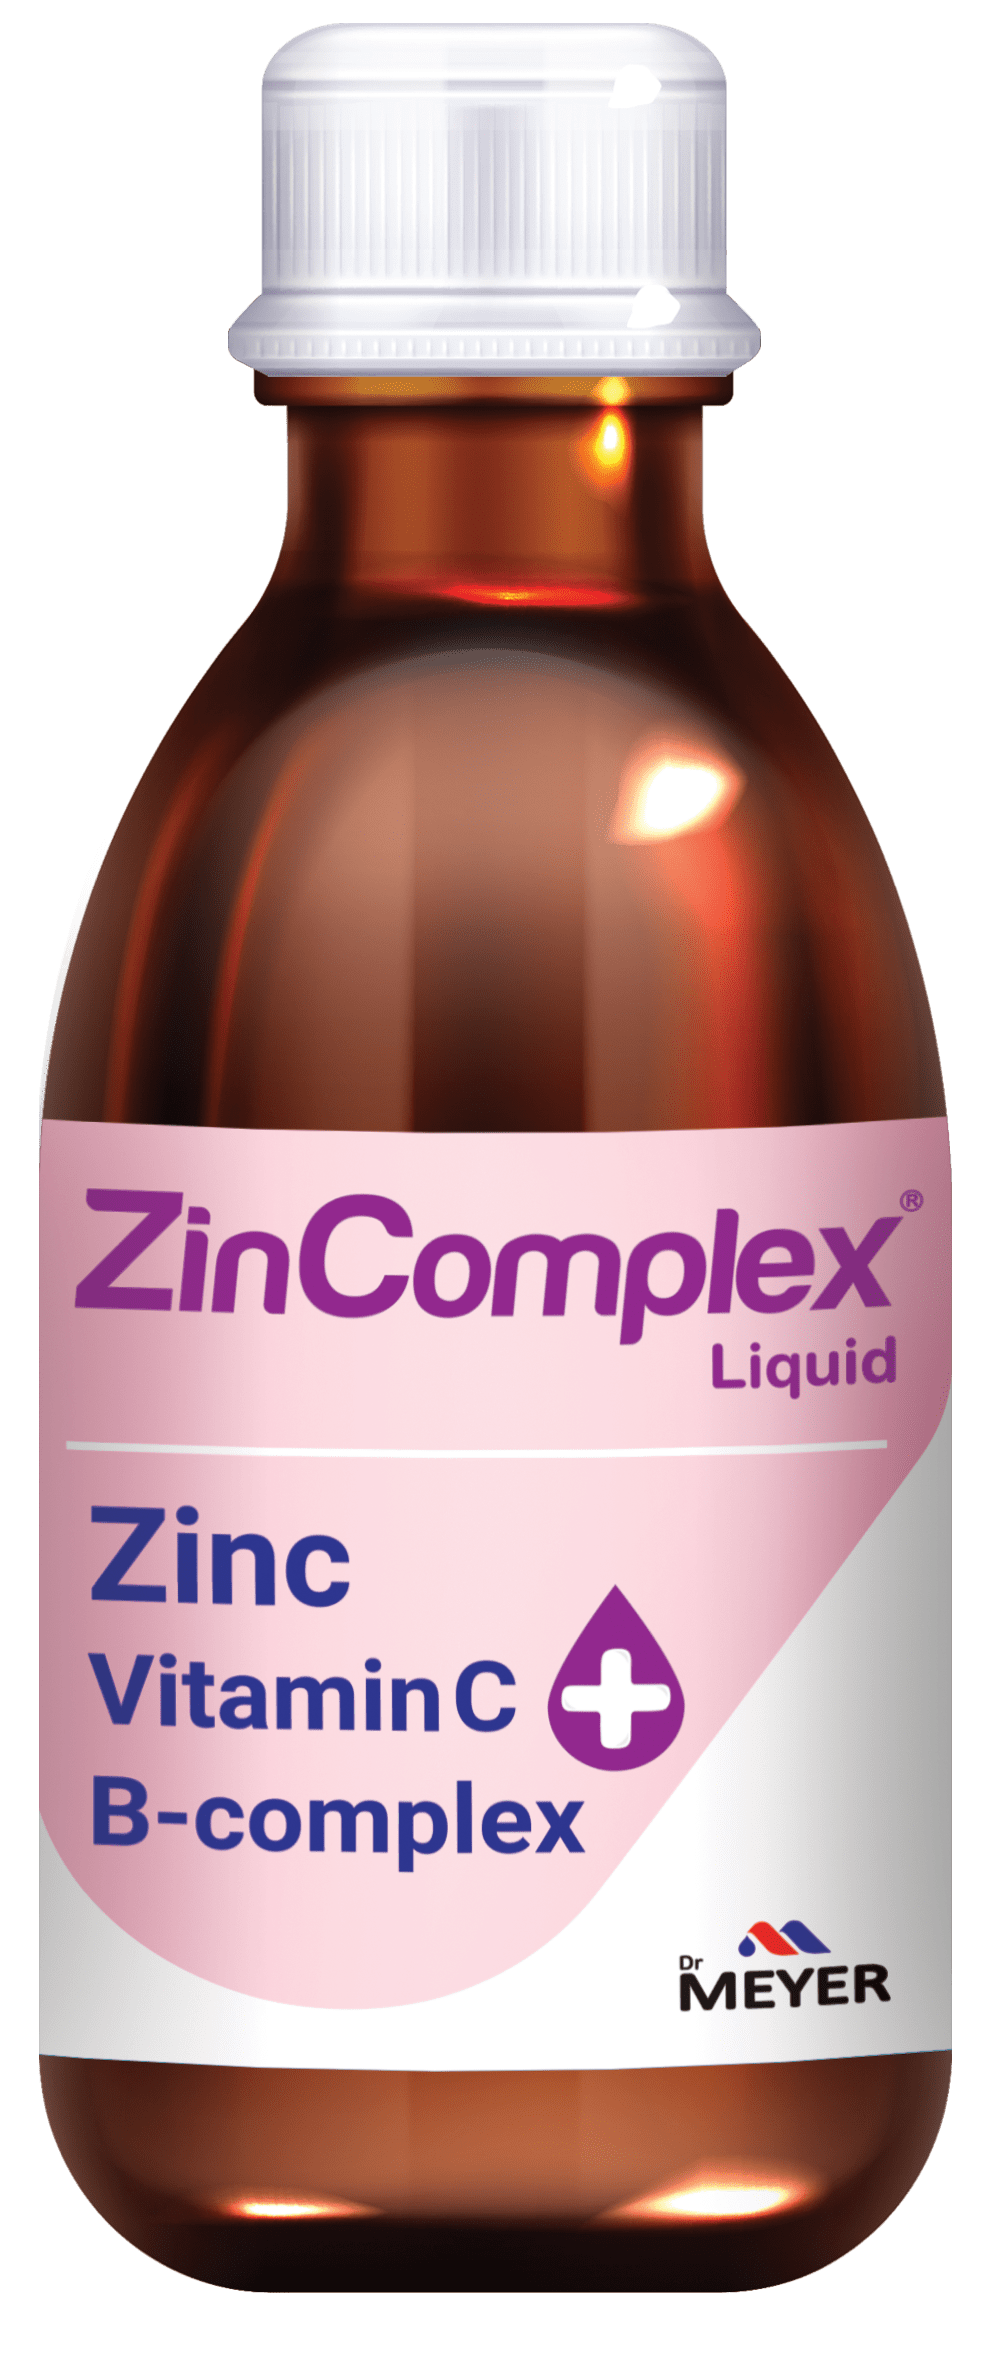 Zincomplex bottle